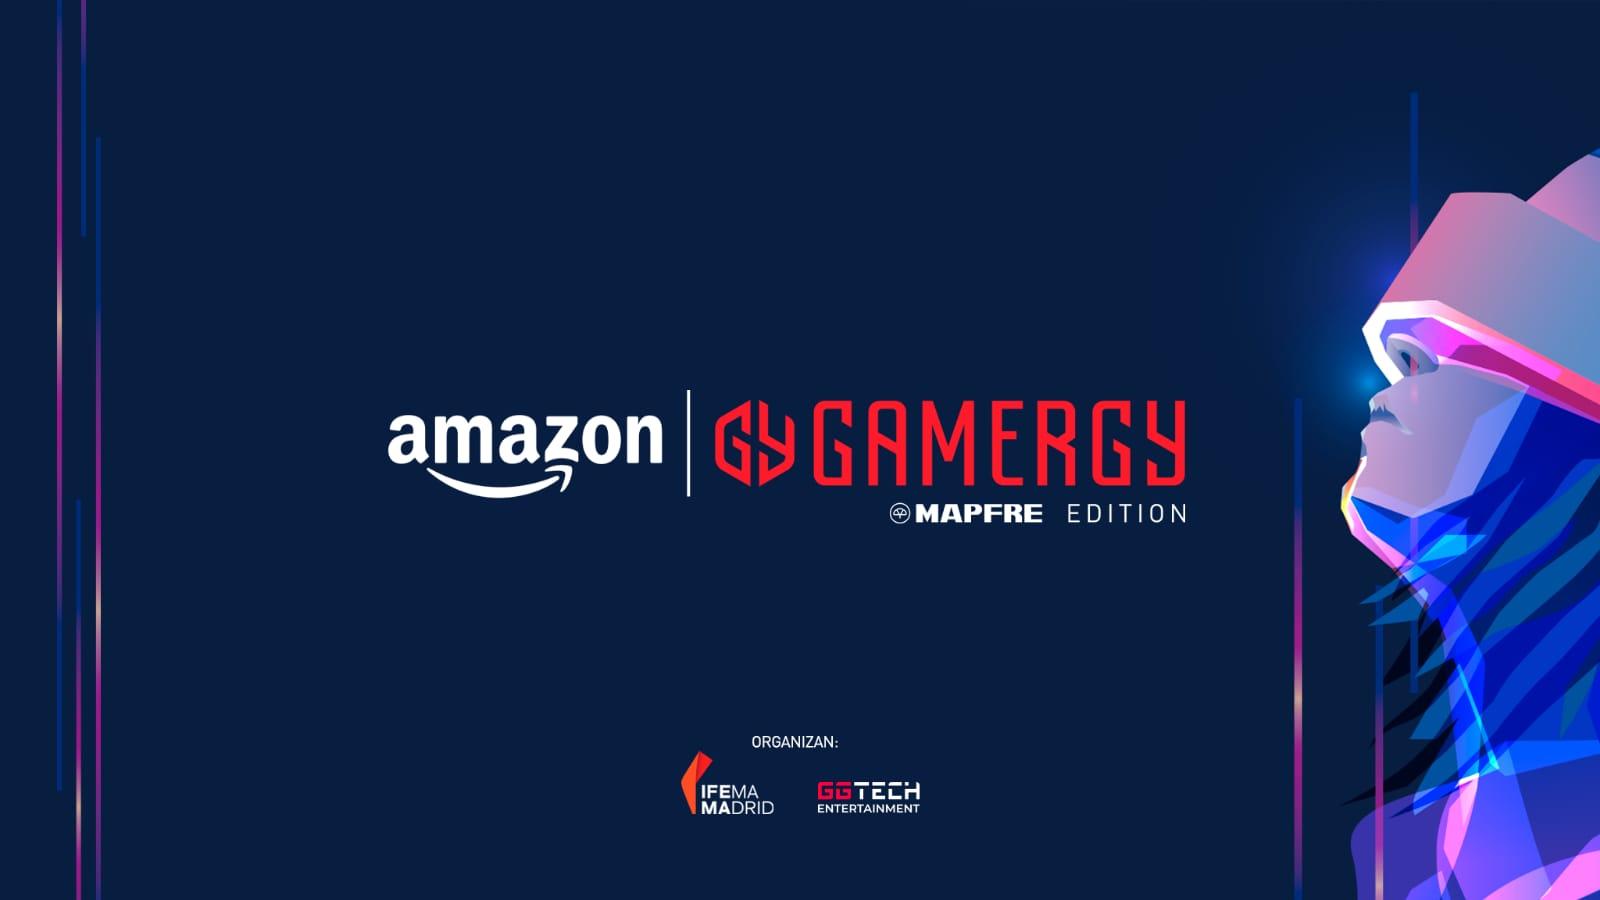 Imagen promocional Amazon GAMERGY MAPFRE Edition